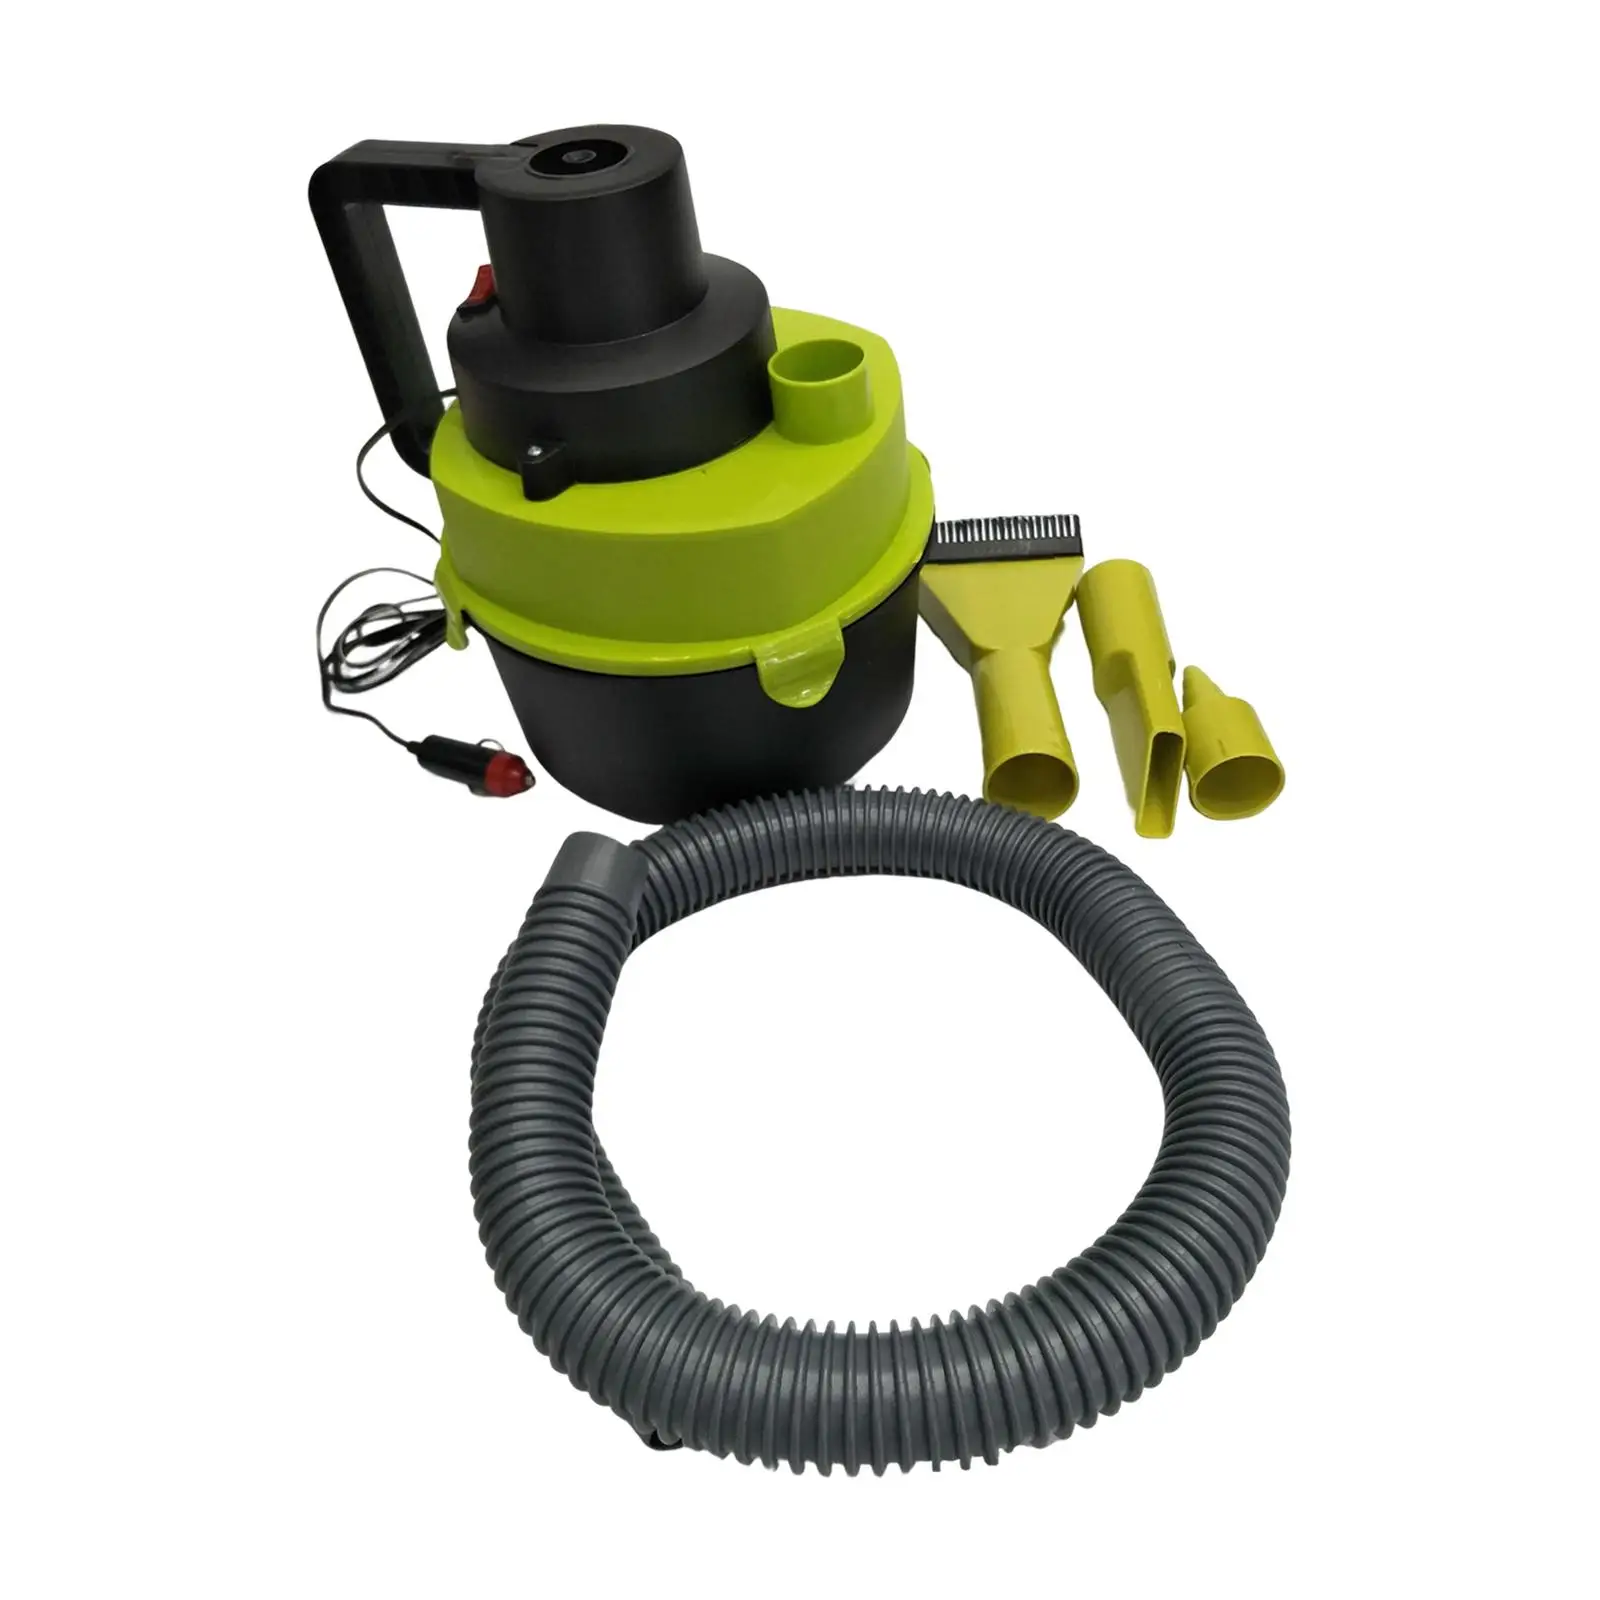 Shop Vacuum Cleaner Multifunctional Dual Use Handheld Debris Liquid Car Vacuum for Basement Cars Corners Workshop Window Seams